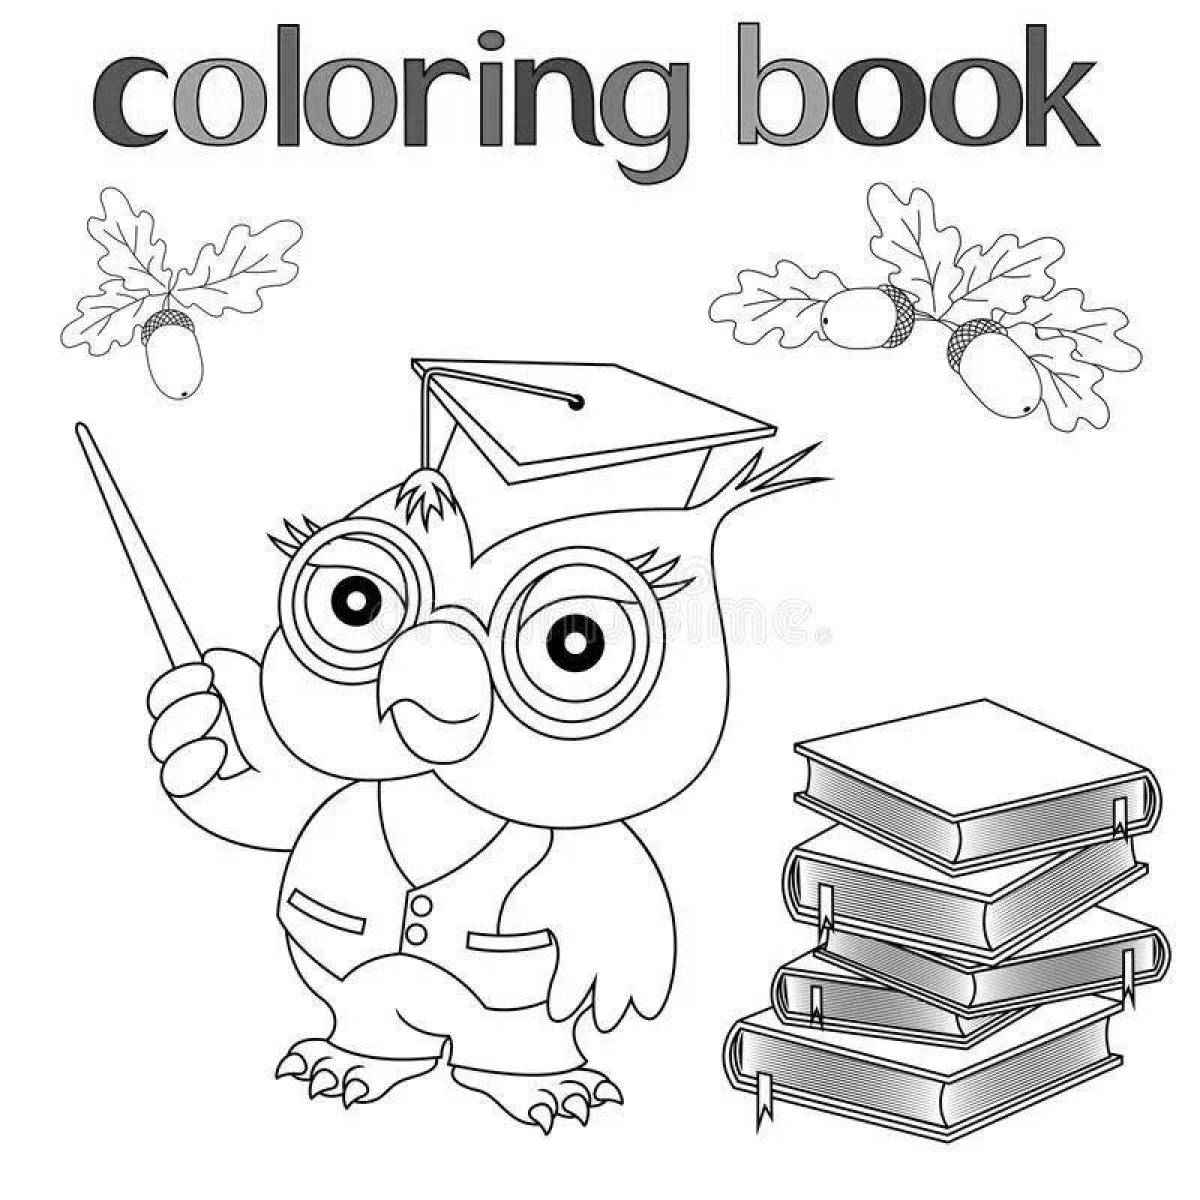 Great scientific owl coloring book